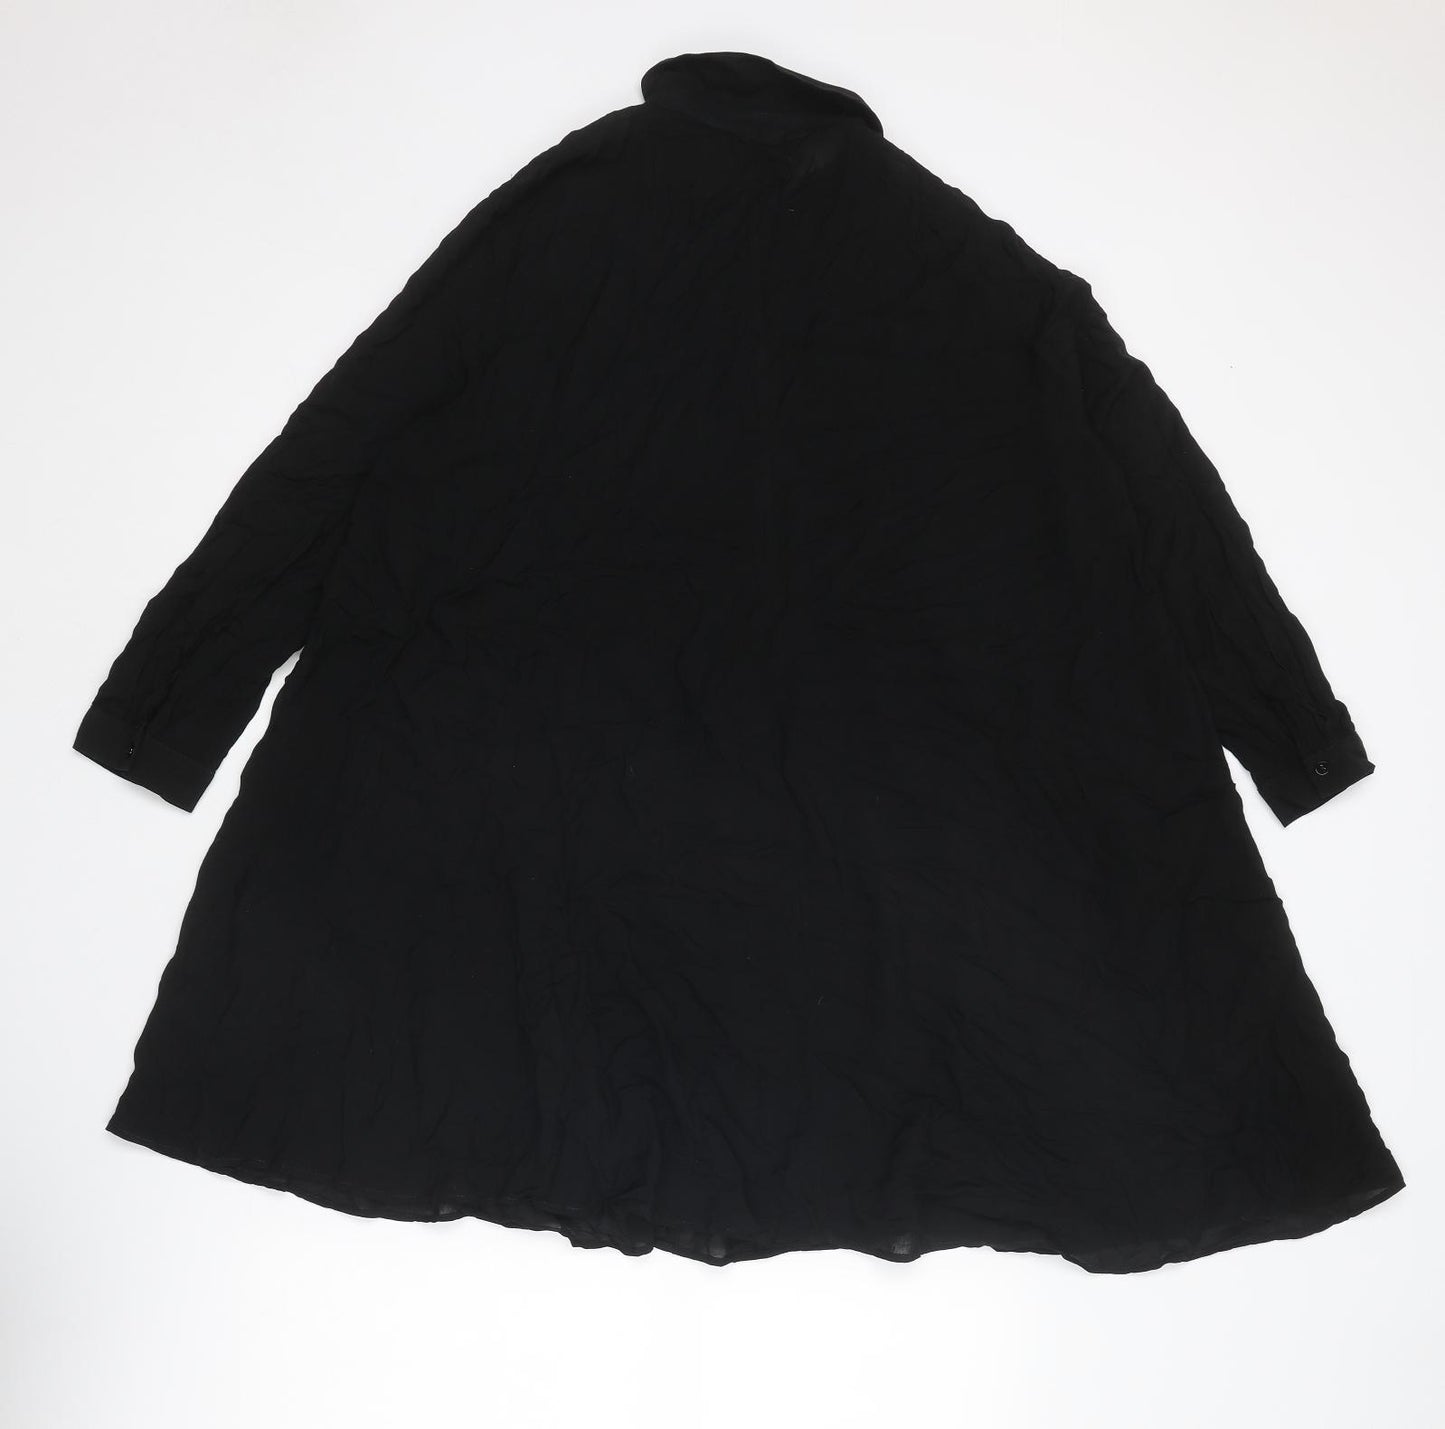 Zara Womens Black Viscose Shirt Dress Size M Collared Button